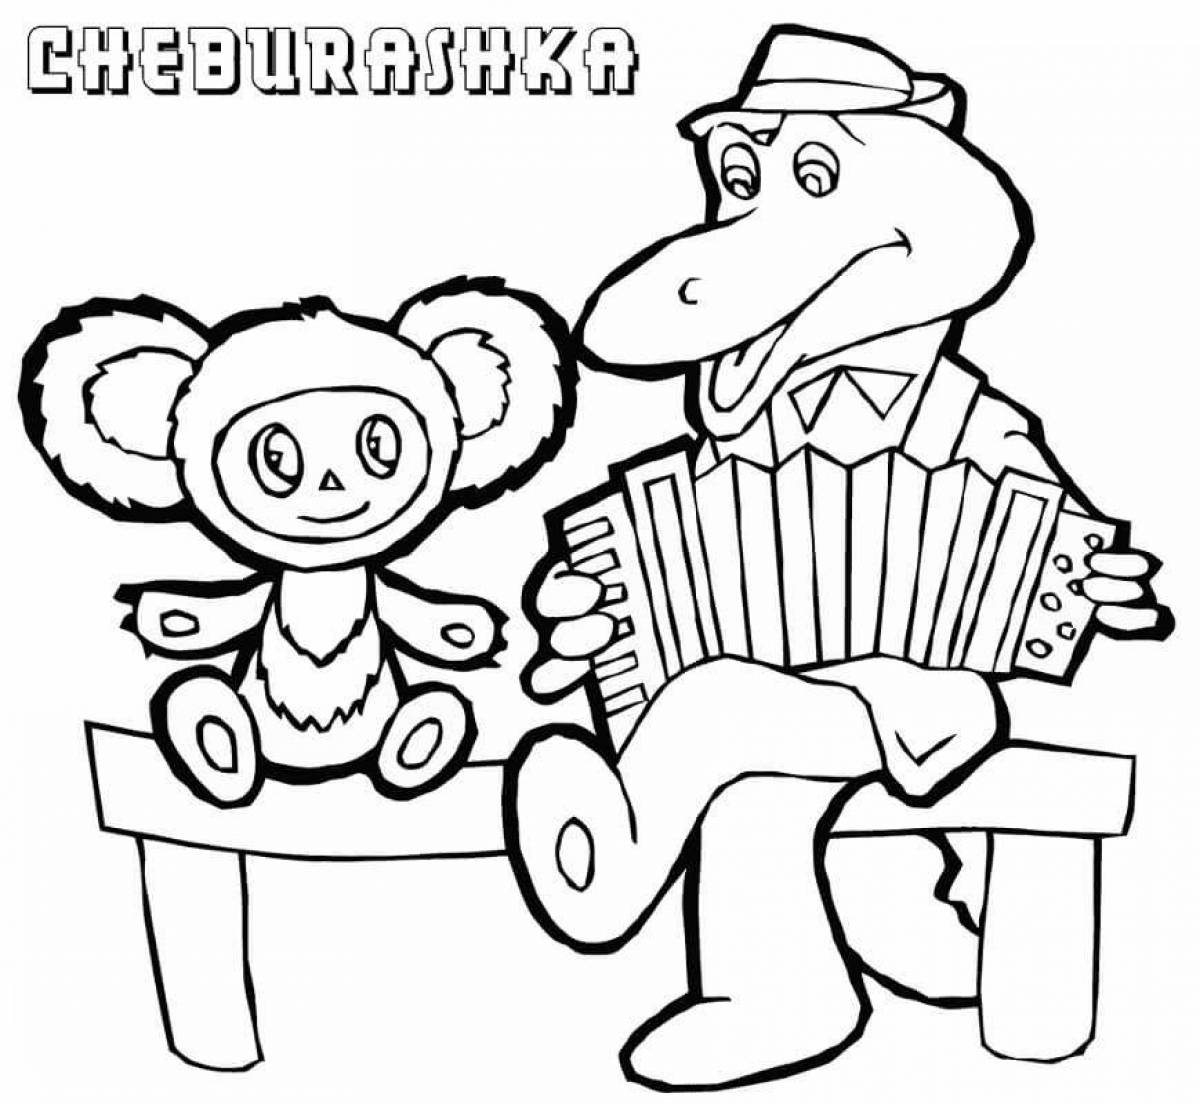 Coloring page charming cheburashka and crocodile gene